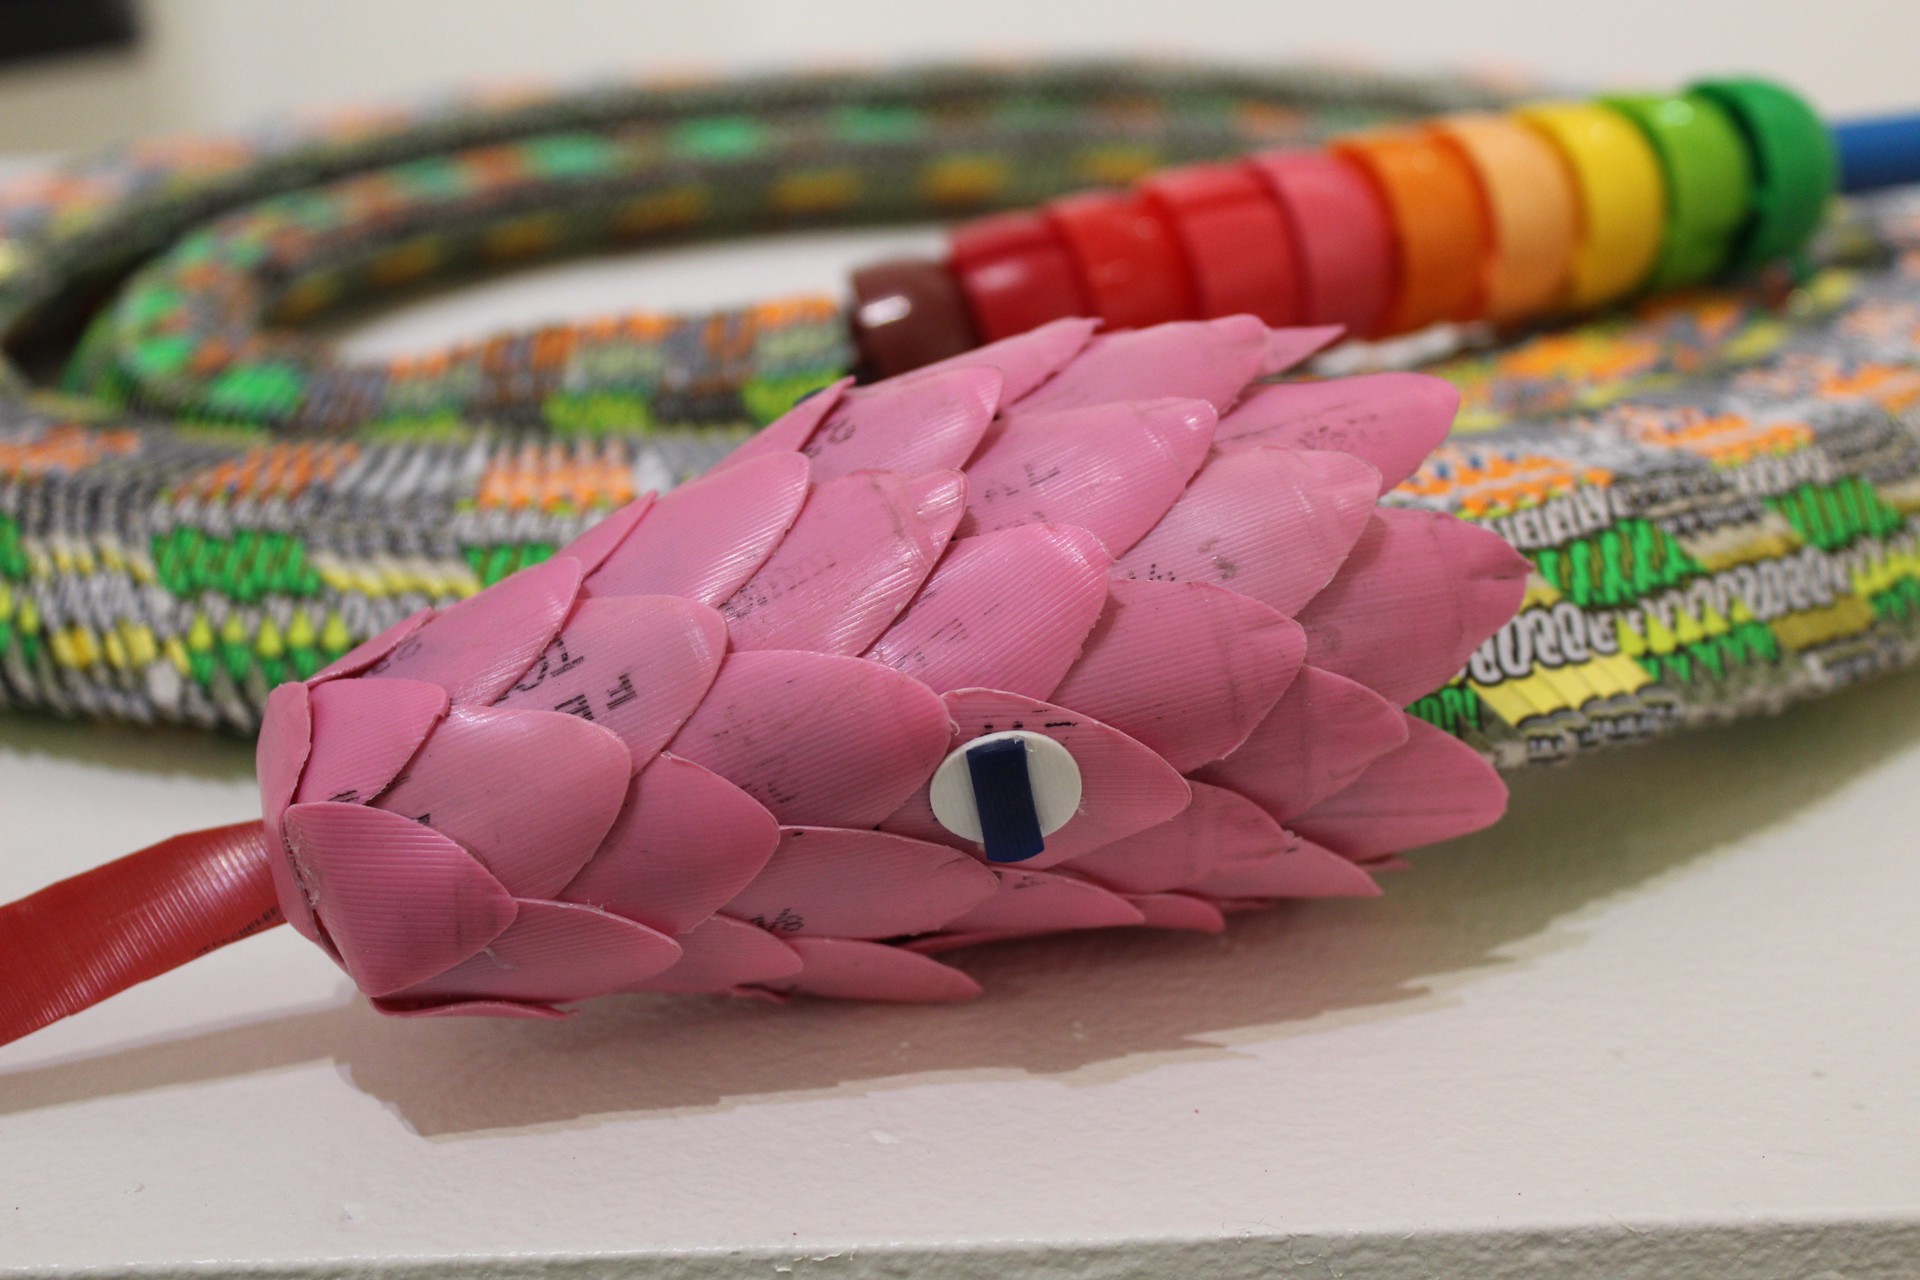 Pink-Headed Snake by Alex Lockwood